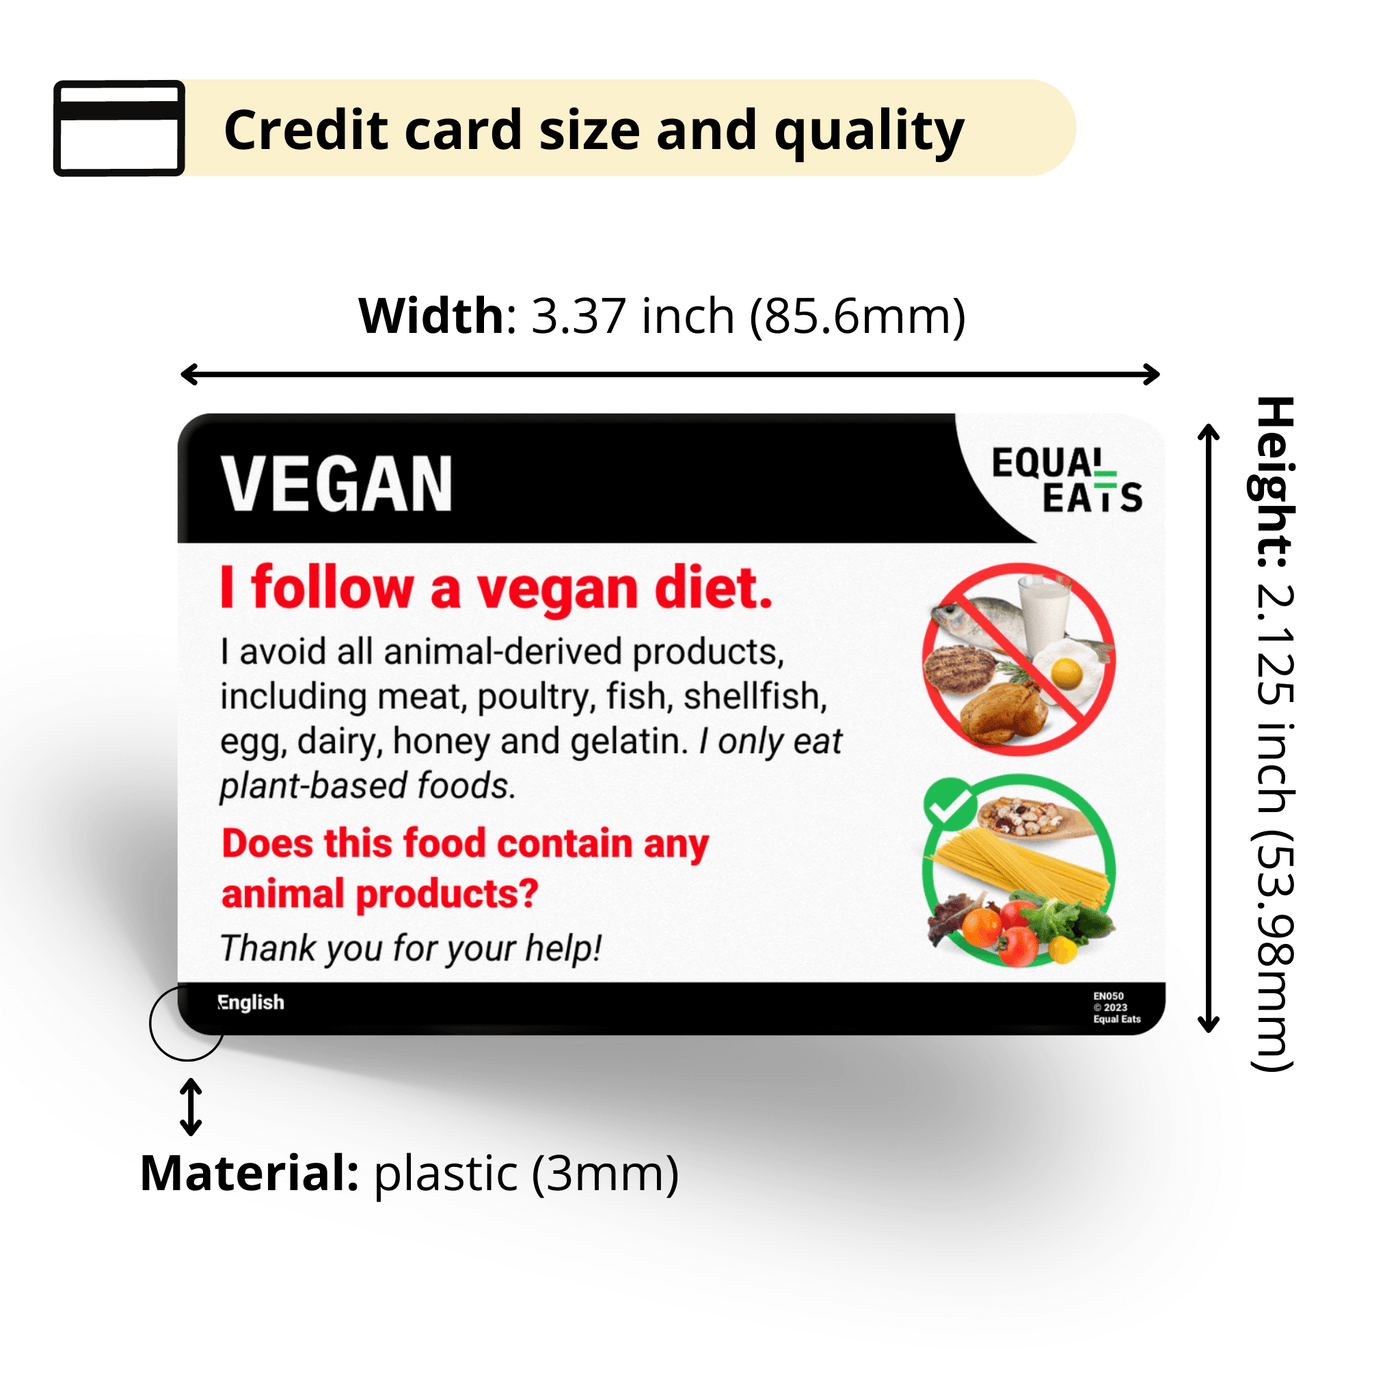 Portuguese (Brazil) Vegan Card